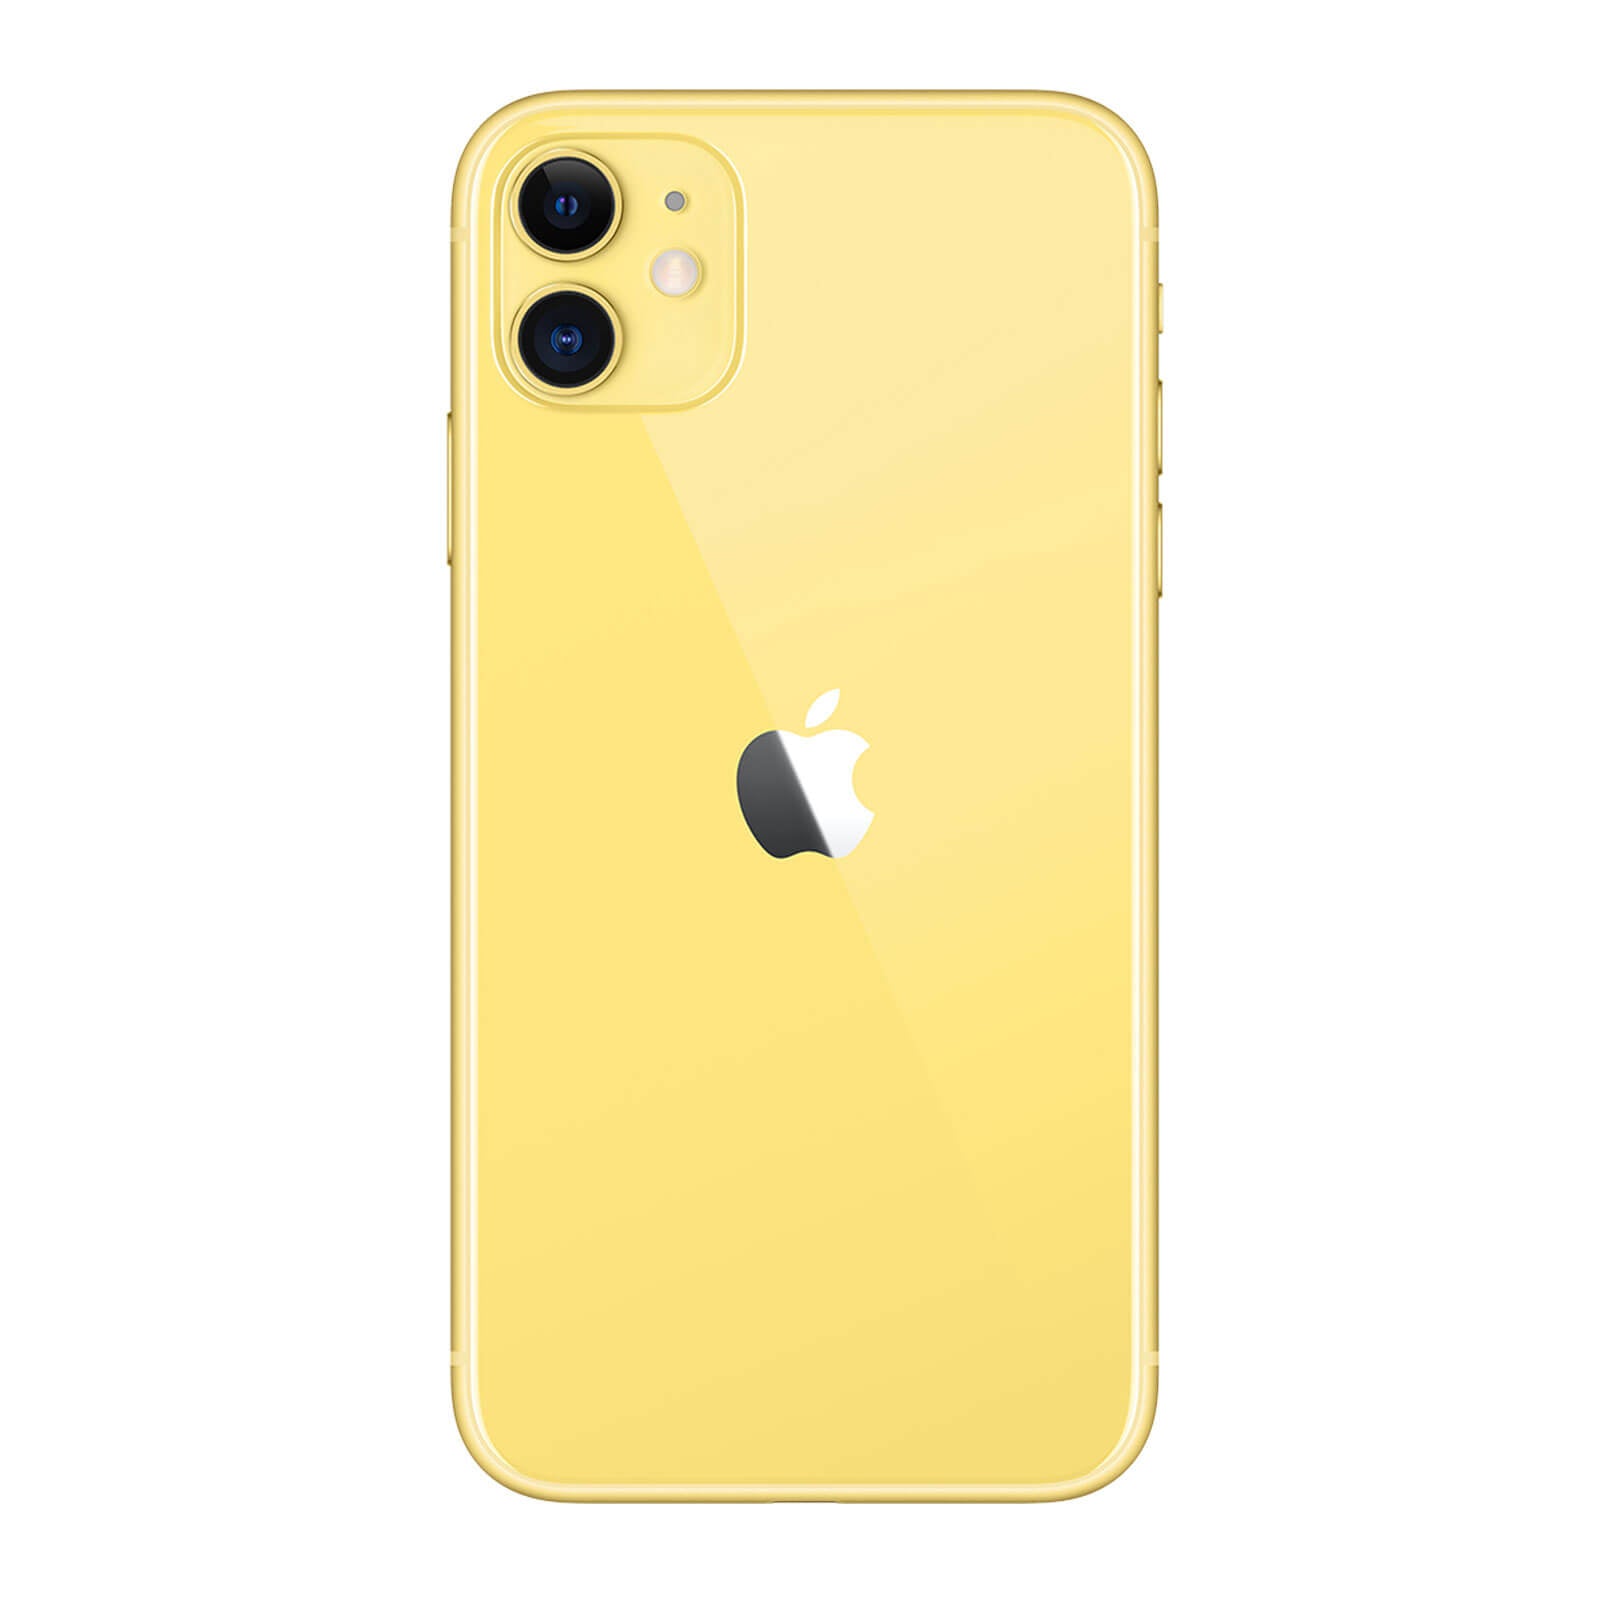 Apple iPhone 11 256GB Yellow Pristine - Verizon